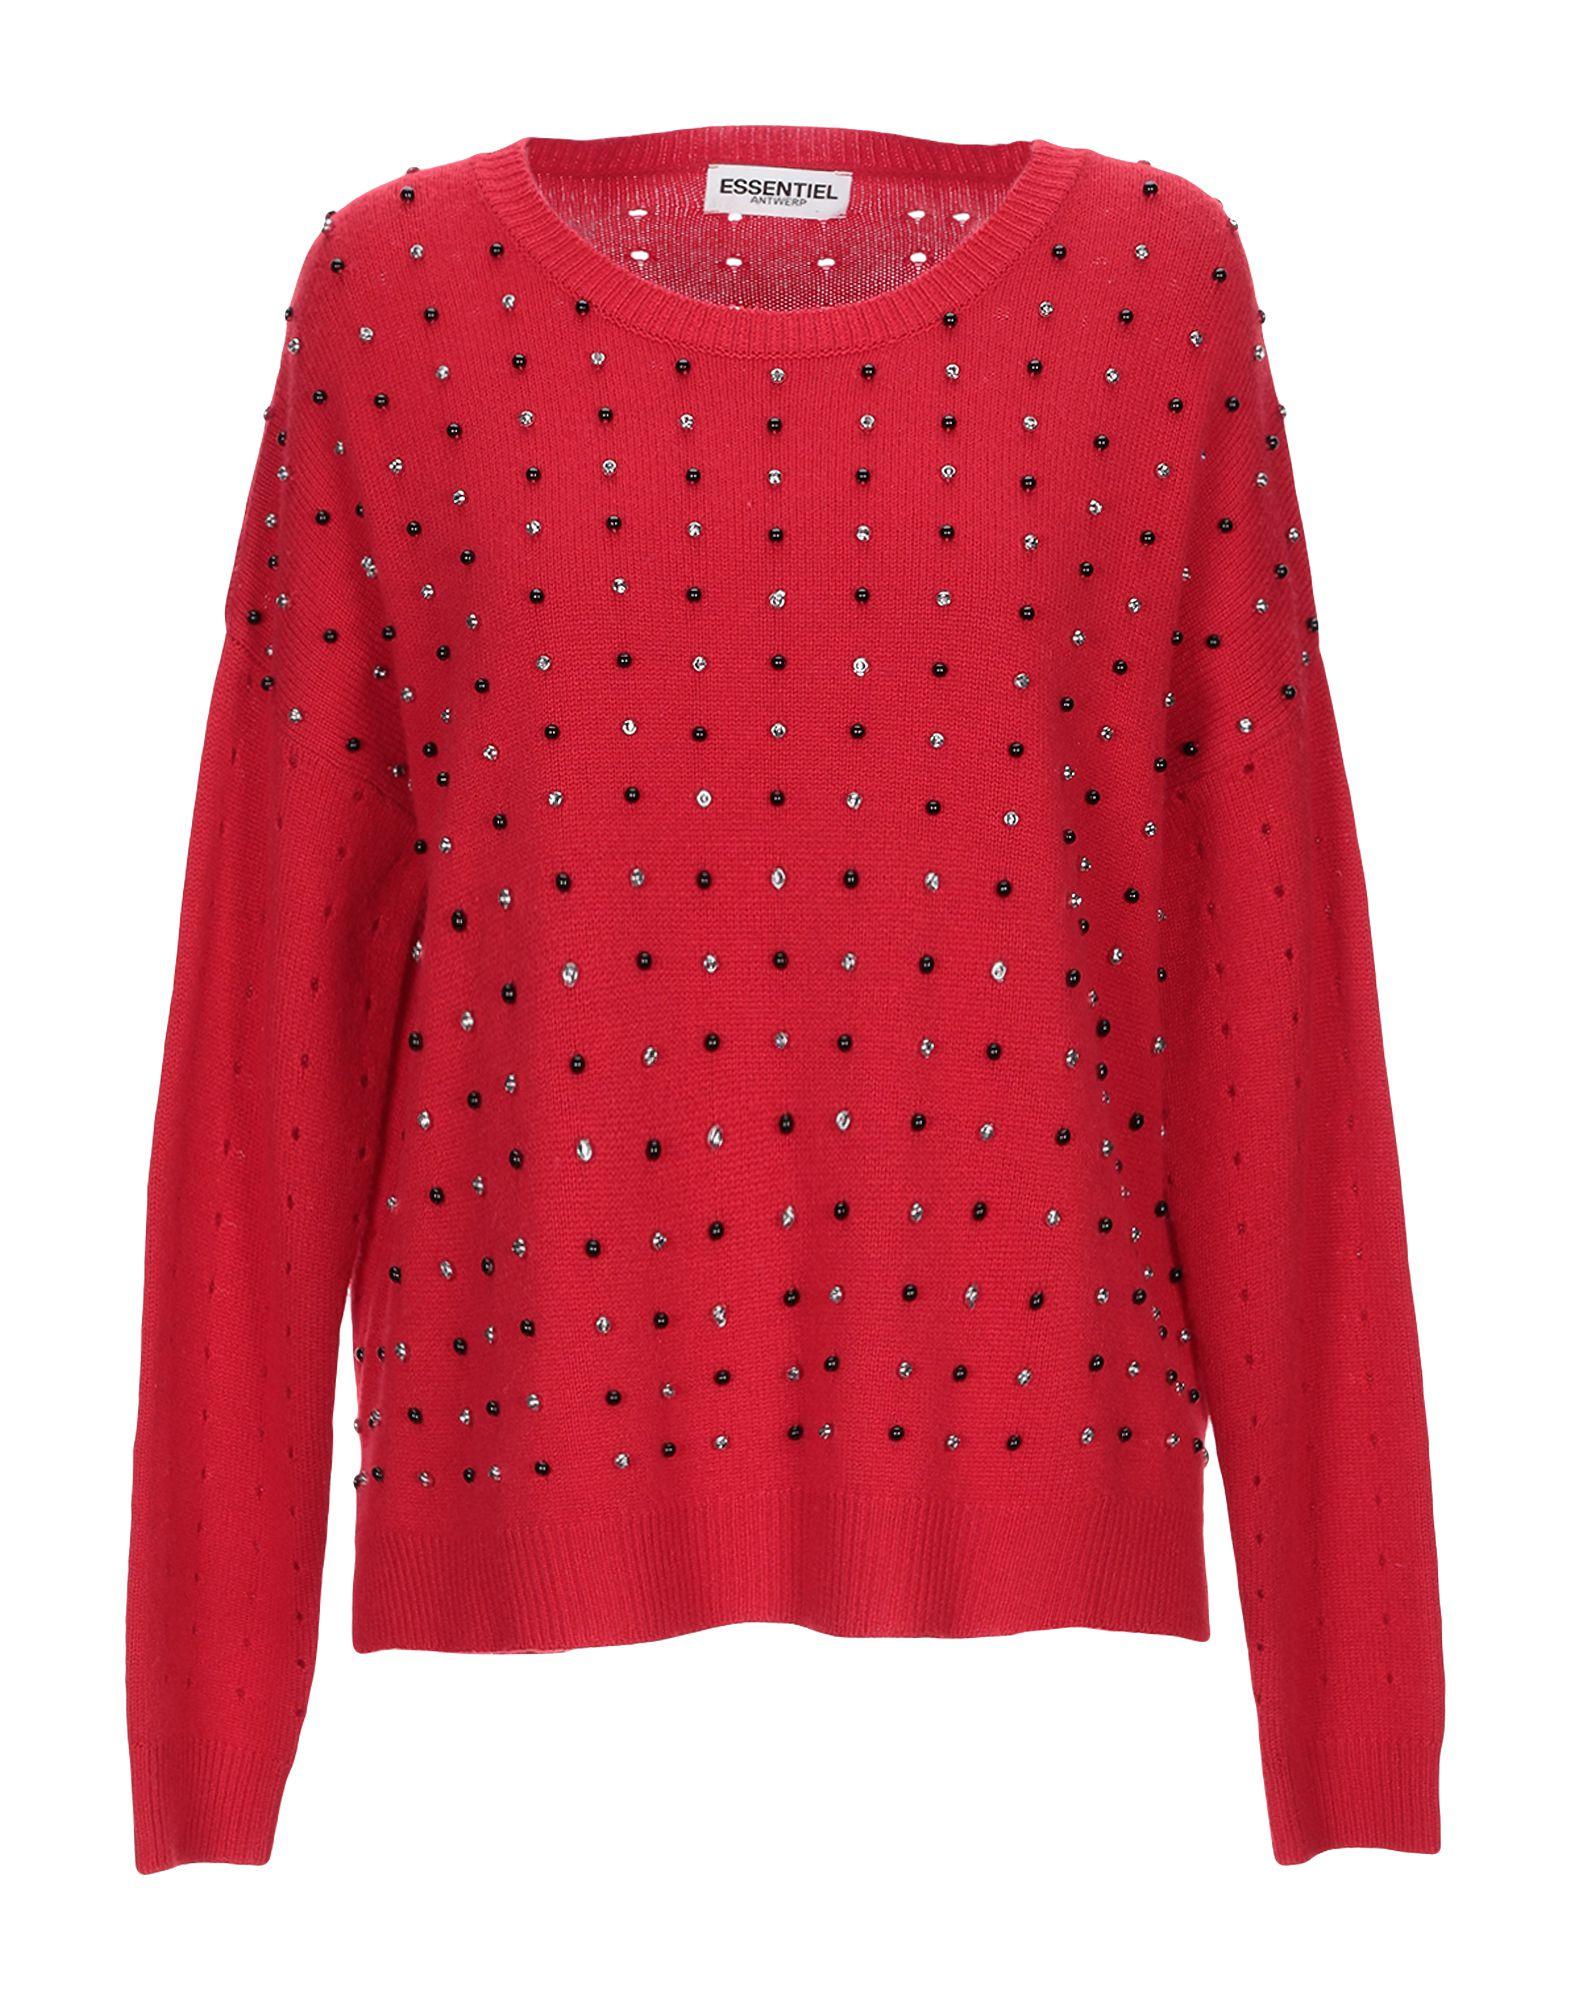 Essentiel Antwerp Sweater in Red - Lyst